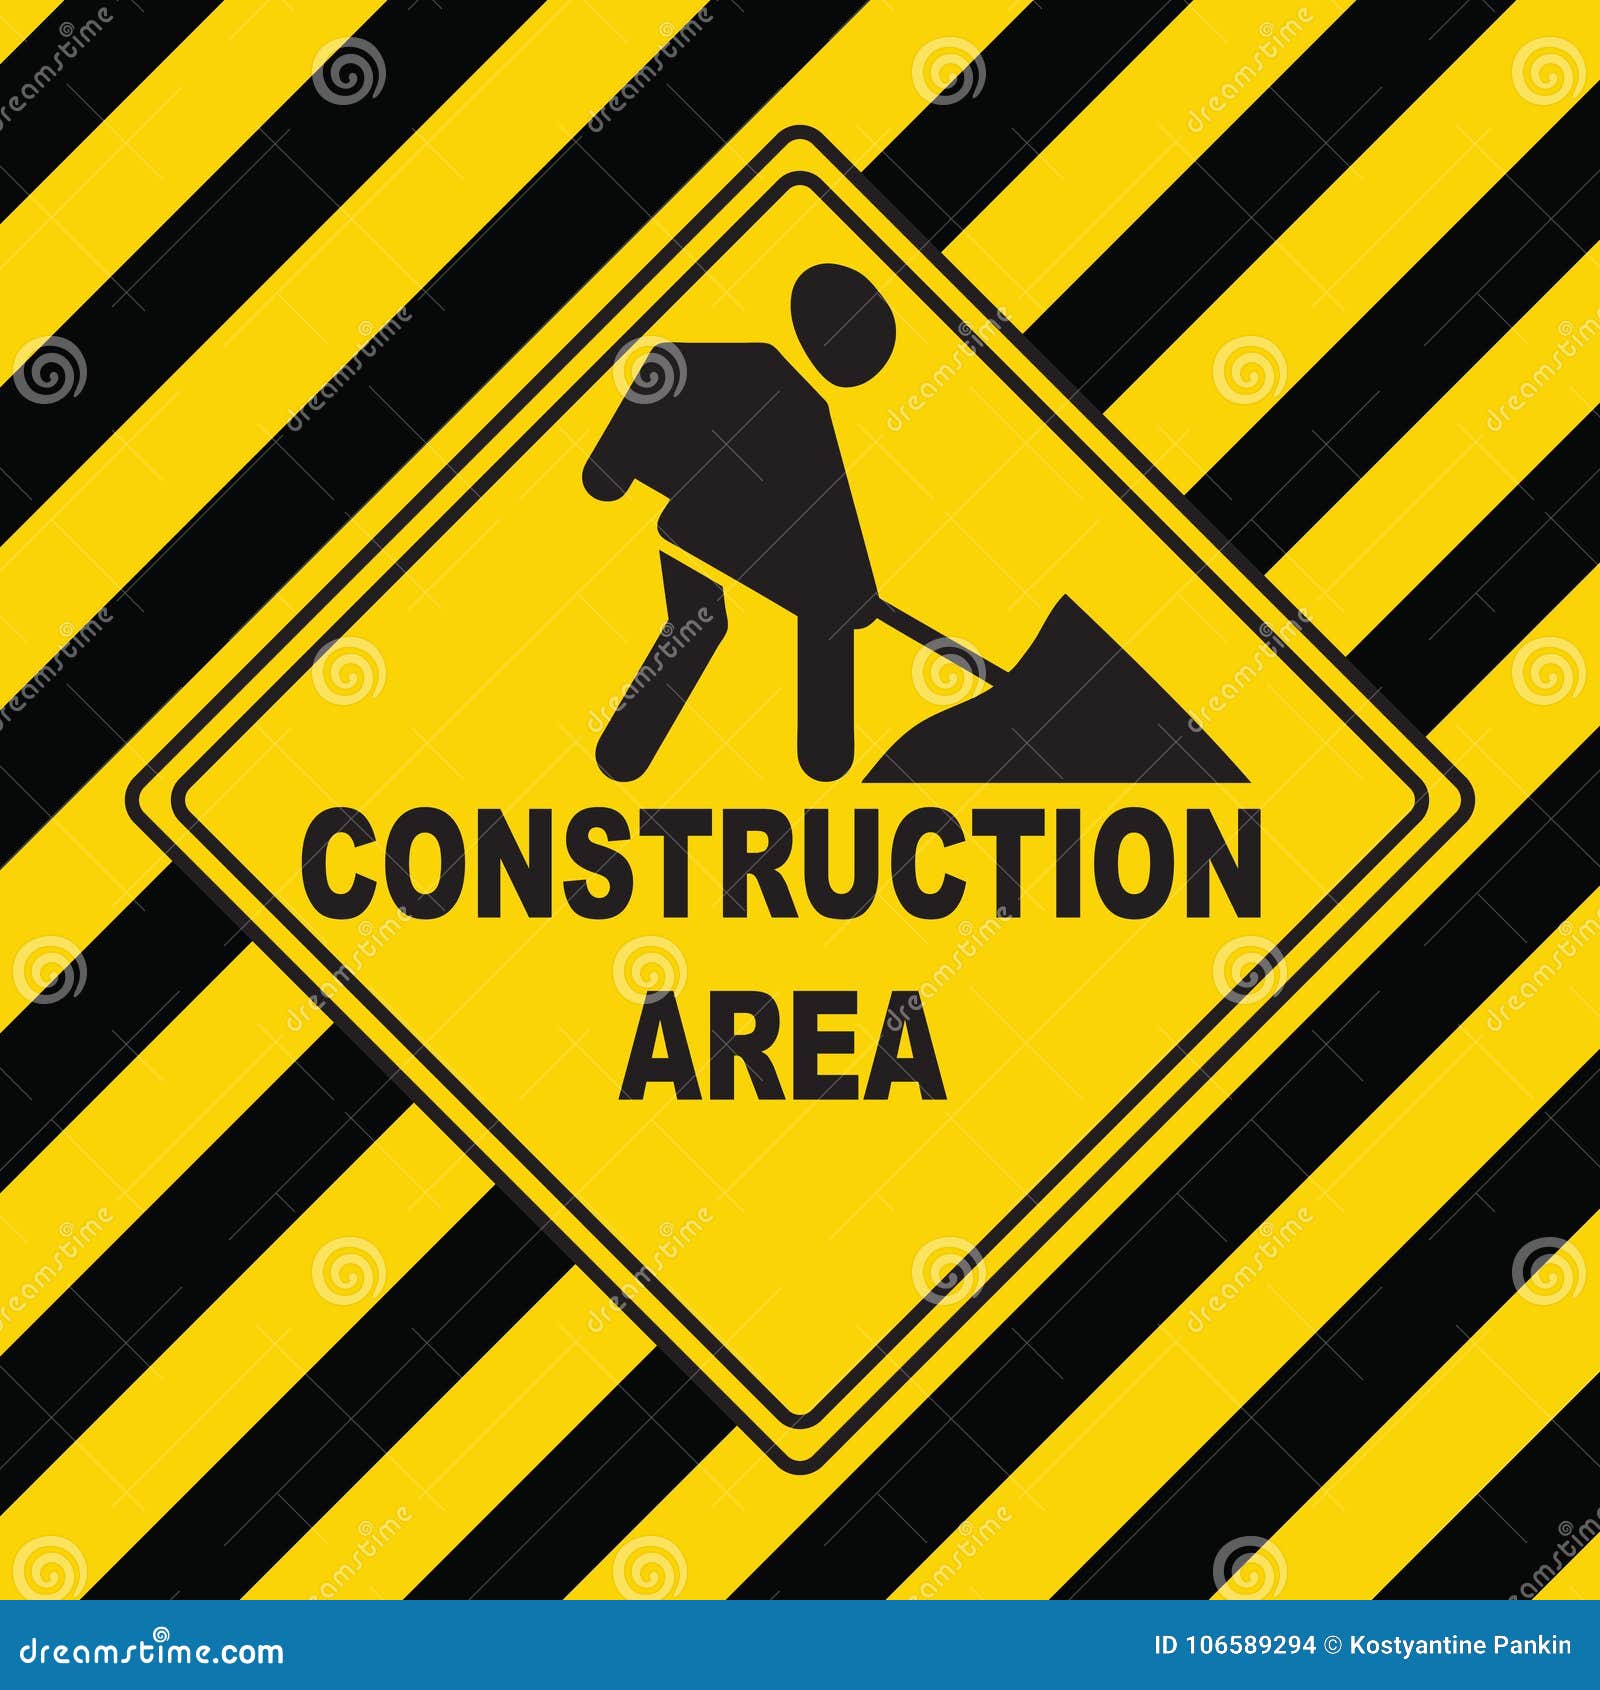 Repair Work - Construction Zone Stock Vector - Illustration of ...